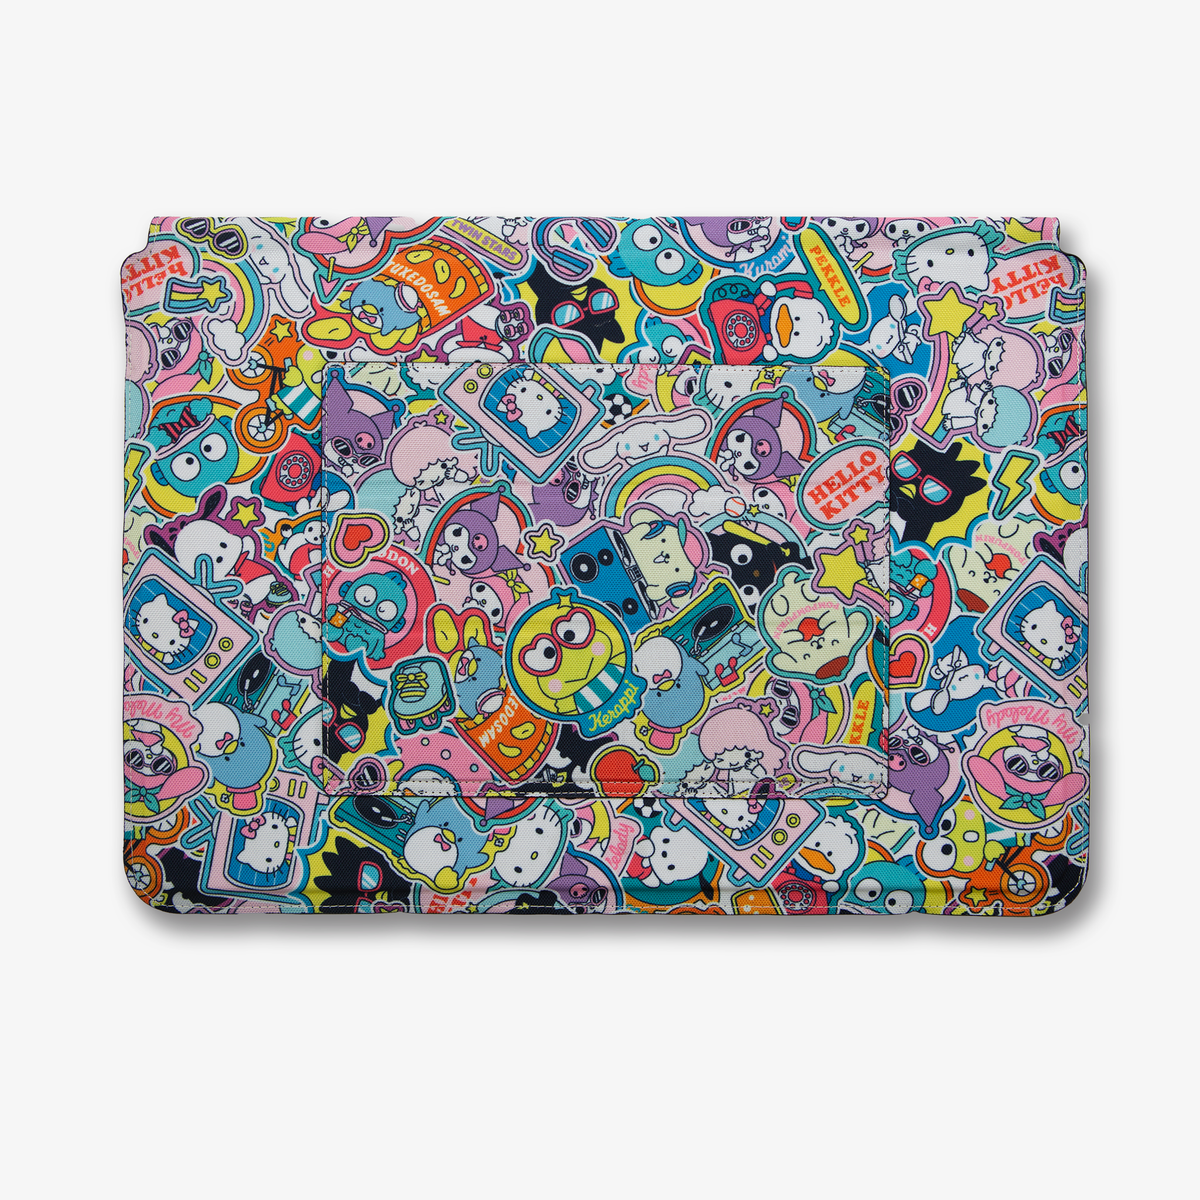  Hello Kitty Messenger Syle Laptop Case, Red, 15.4 : Electronics